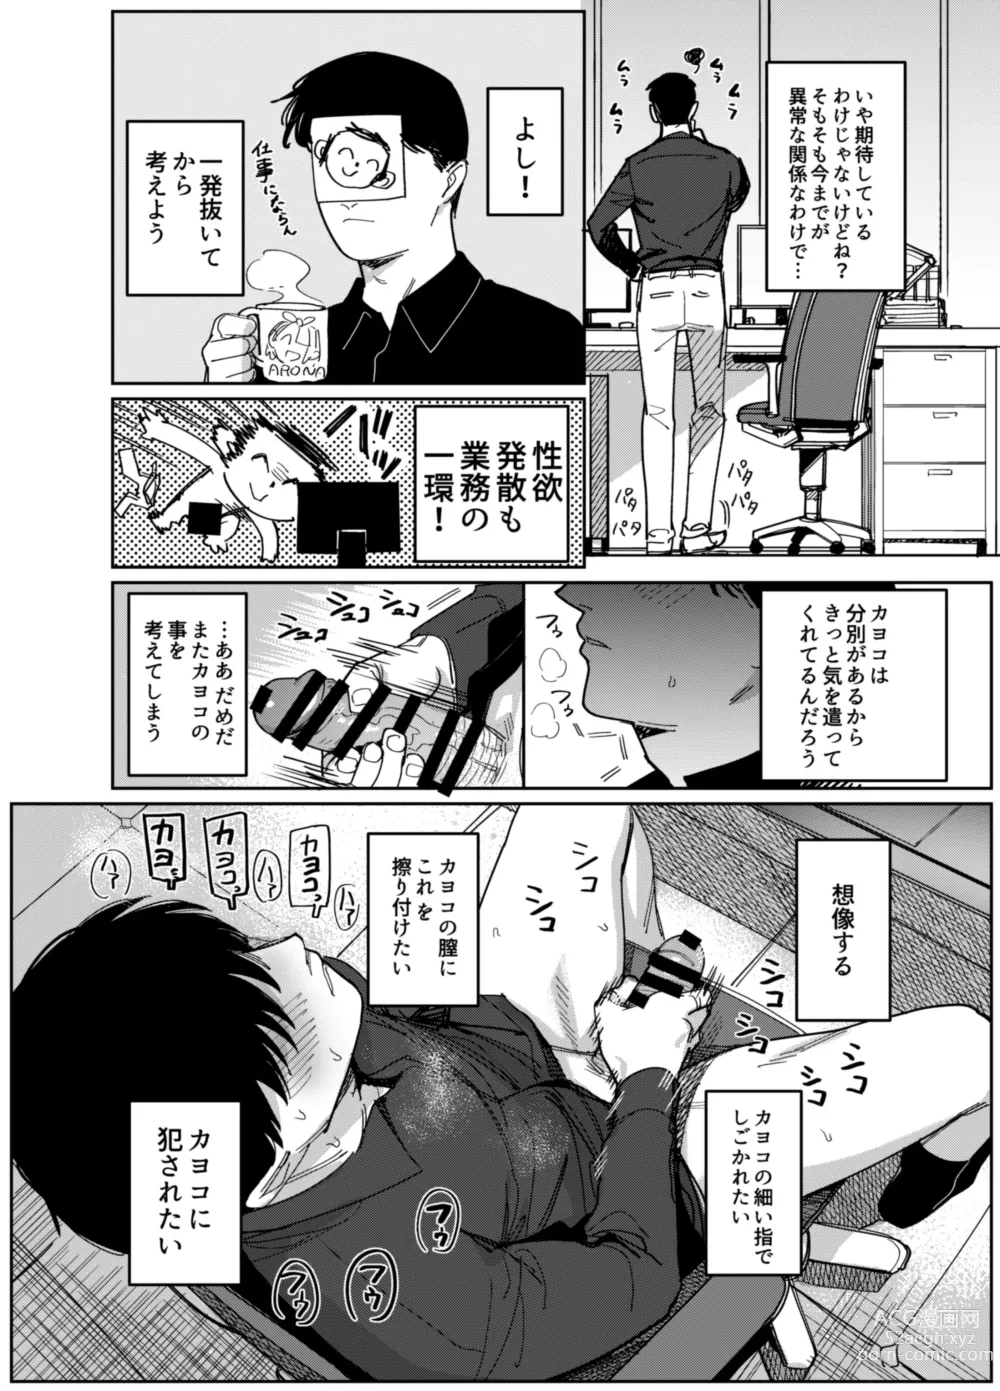 Page 4 of doujinshi Onikata Kayoko wa Konna Koto Shinai. Part. 2 - Onikata Kayoko wont do this type of stuff.